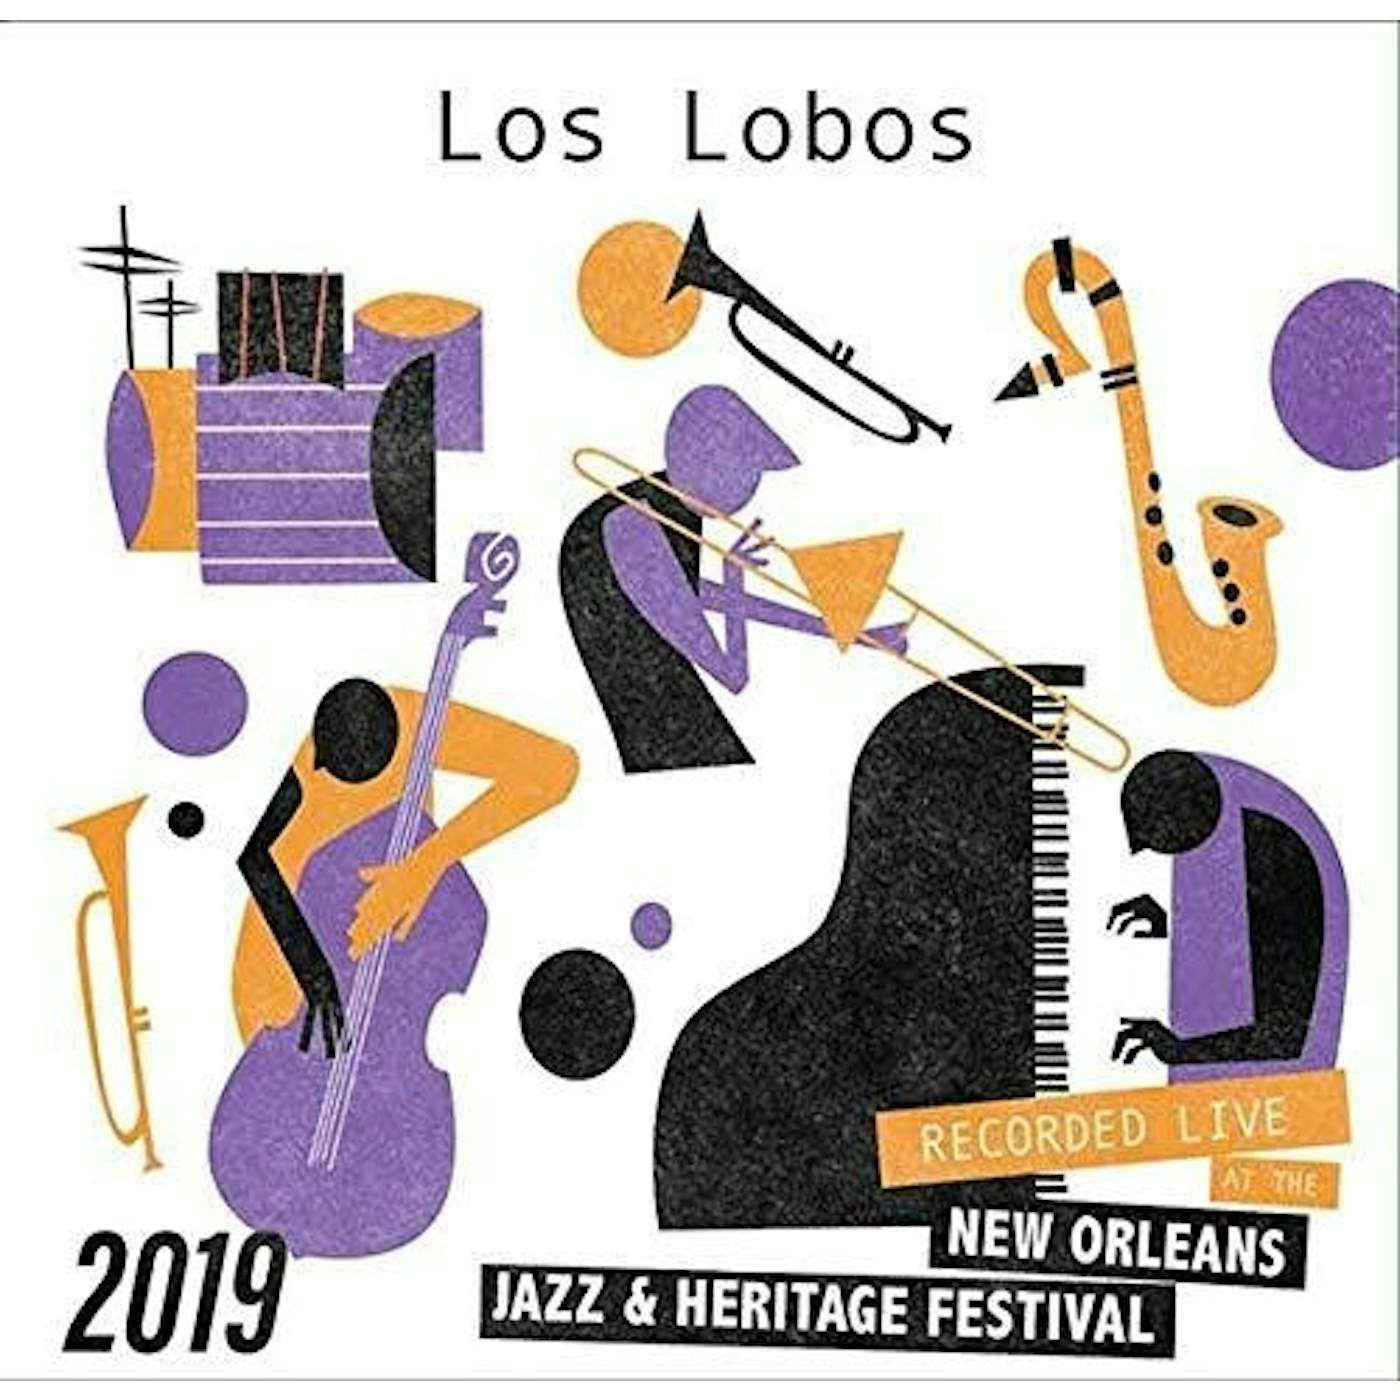 Lobos LIVE AT JAZZFEST 2019 CD